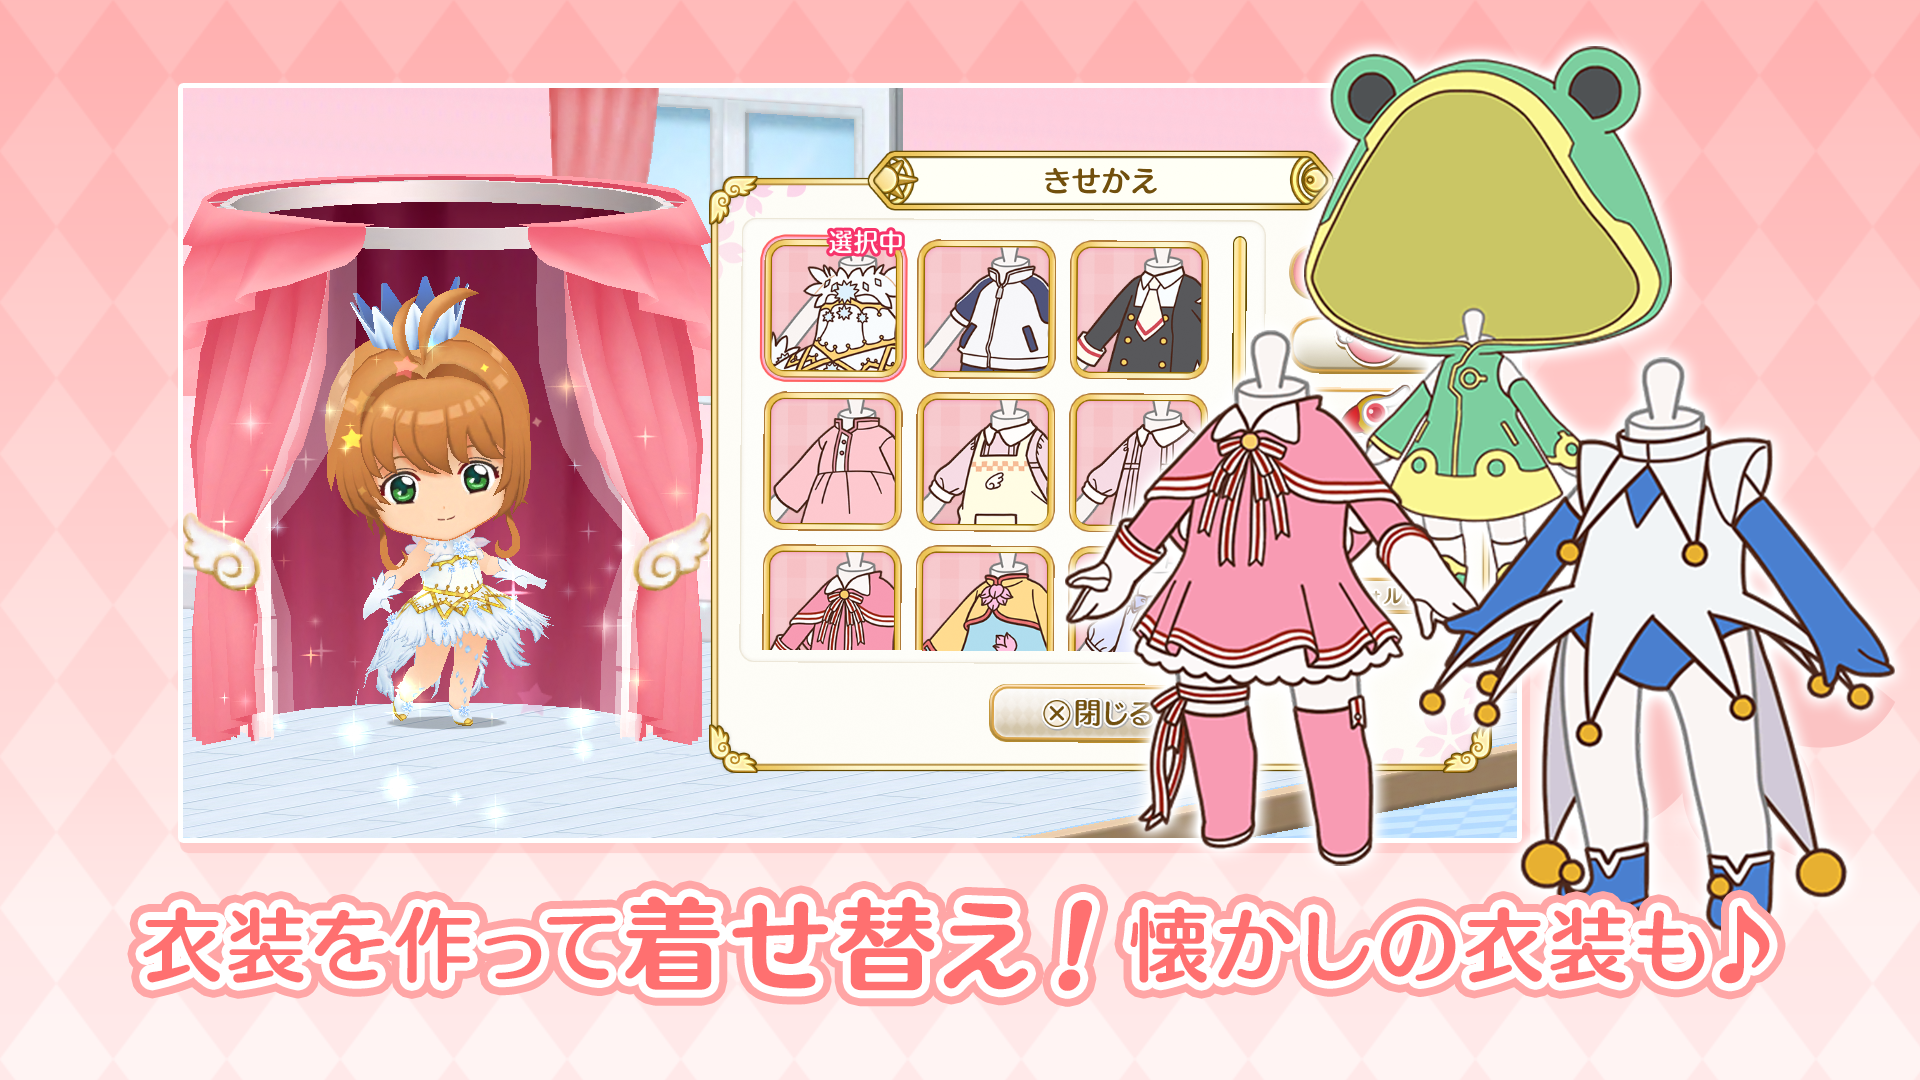 Cardcaptor Sakura Happy Memories Mobile Android Ios Apk Download For Free